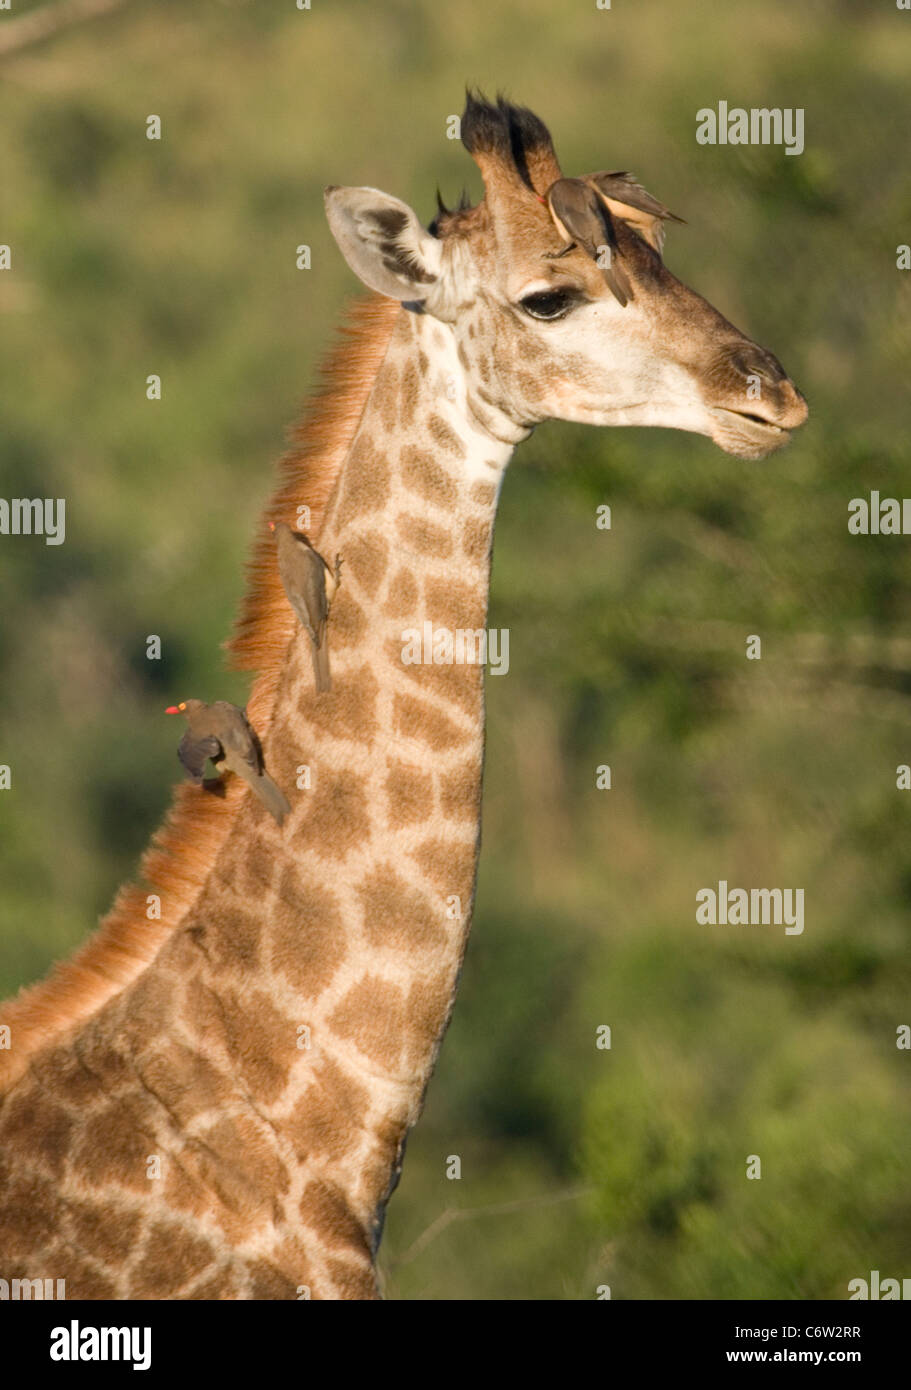 Giraffe with tick birds on neck, South Africa Stock Photo